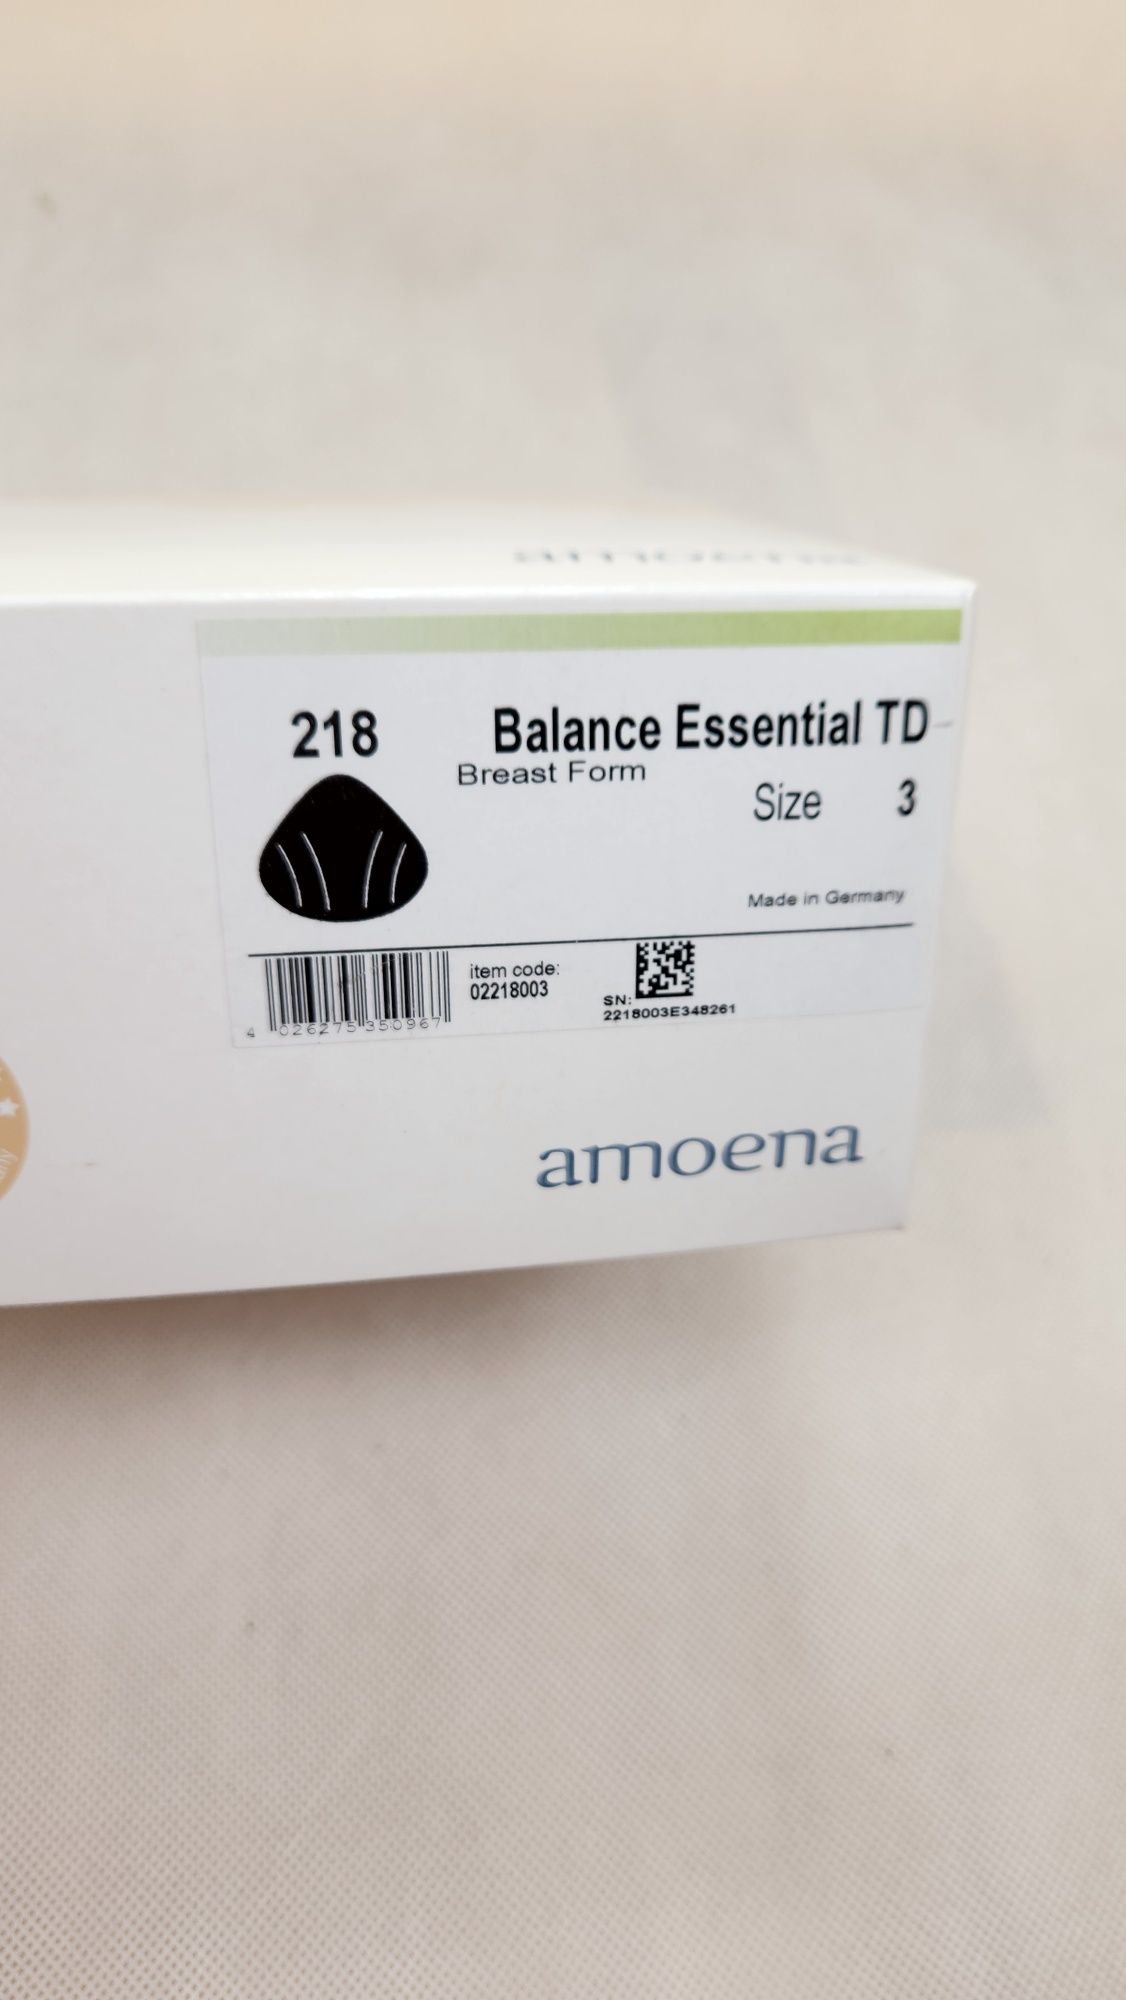 Amoena proteza size 3 218 balance essential TD piersi